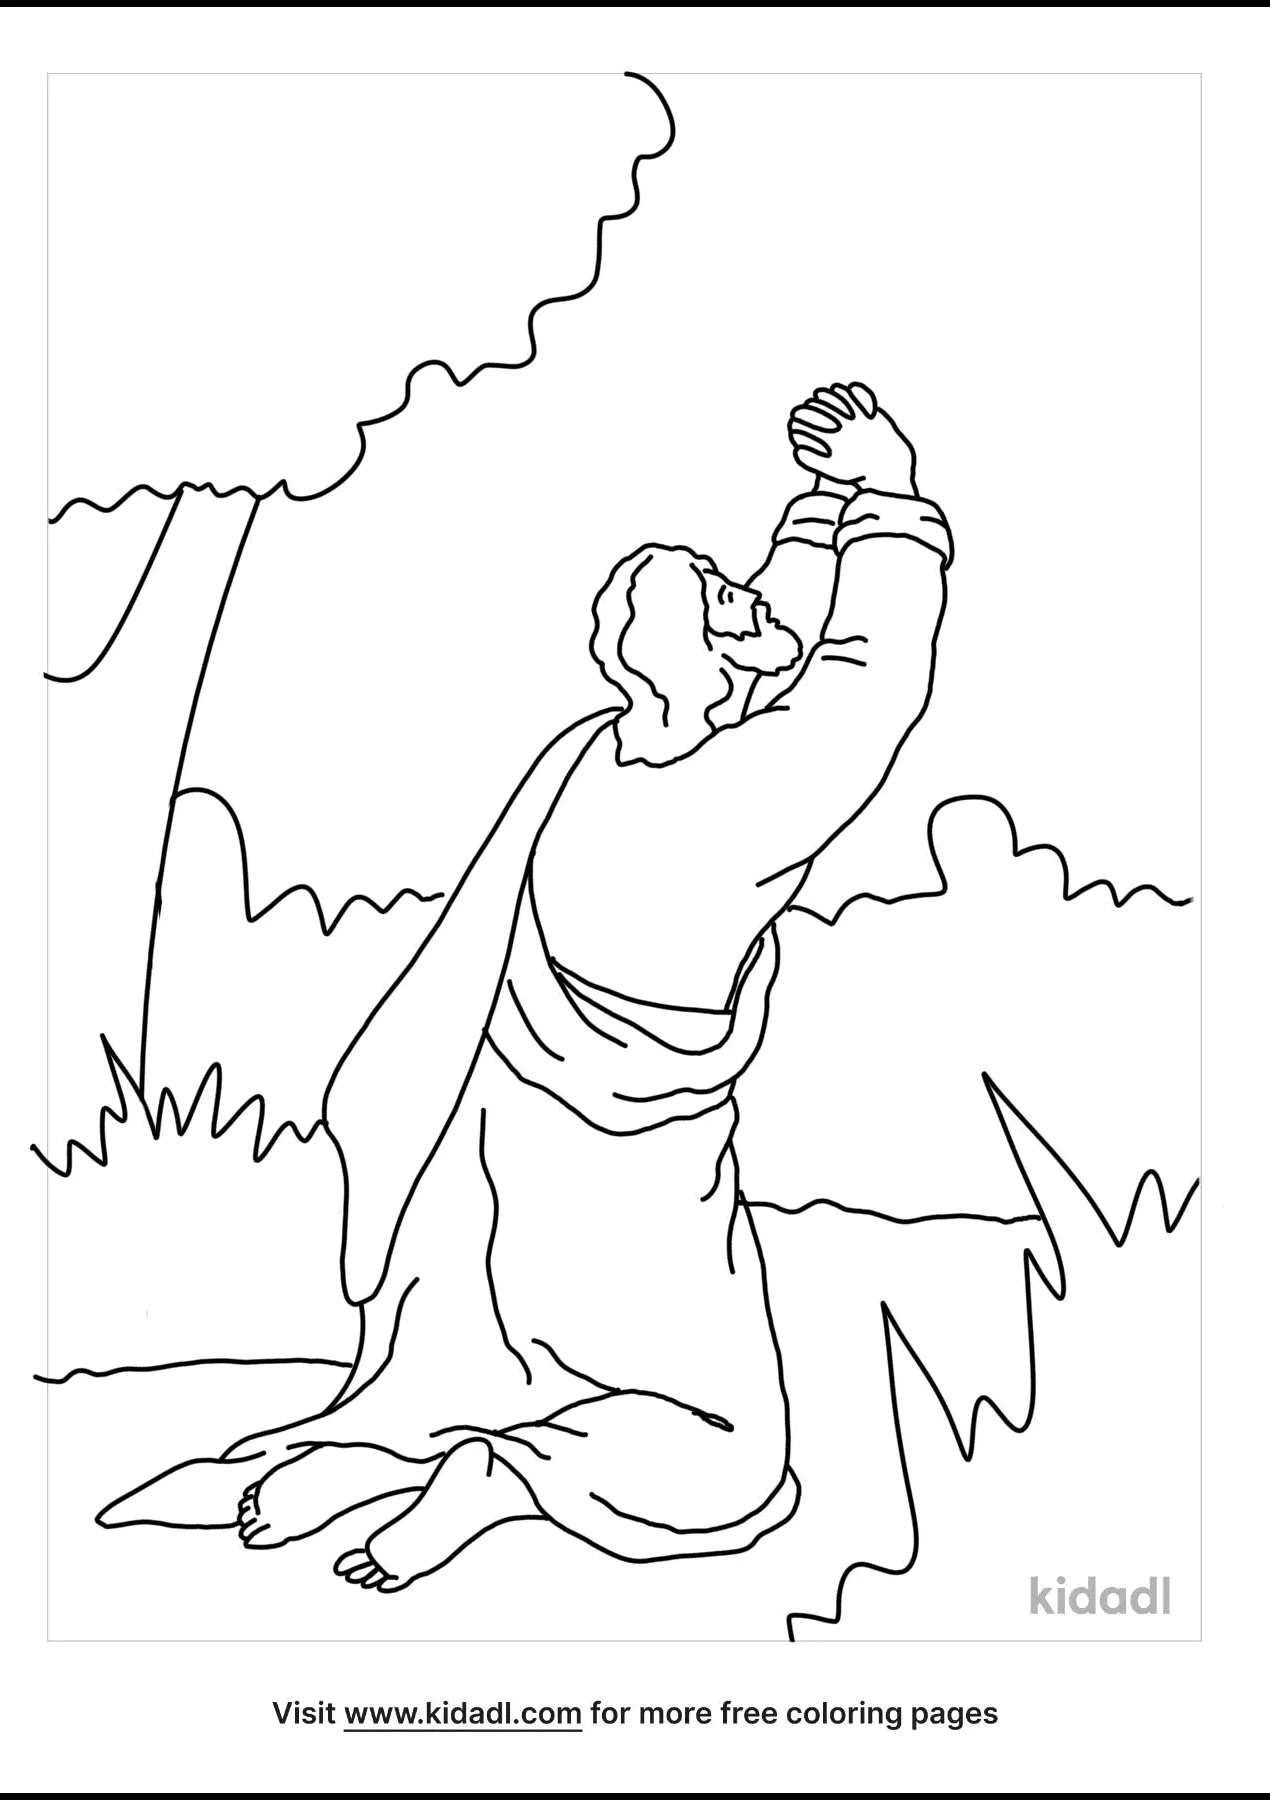 Garden Of Gethsemene Coloring Pages Printable : Garden Of Gethsemane